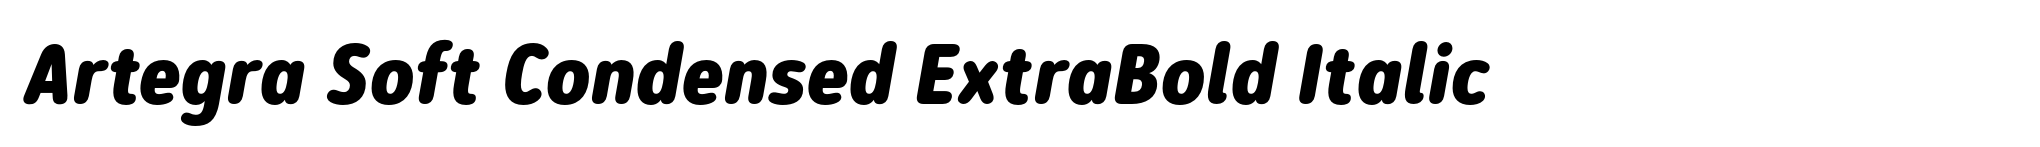 Artegra Soft Condensed ExtraBold Italic image